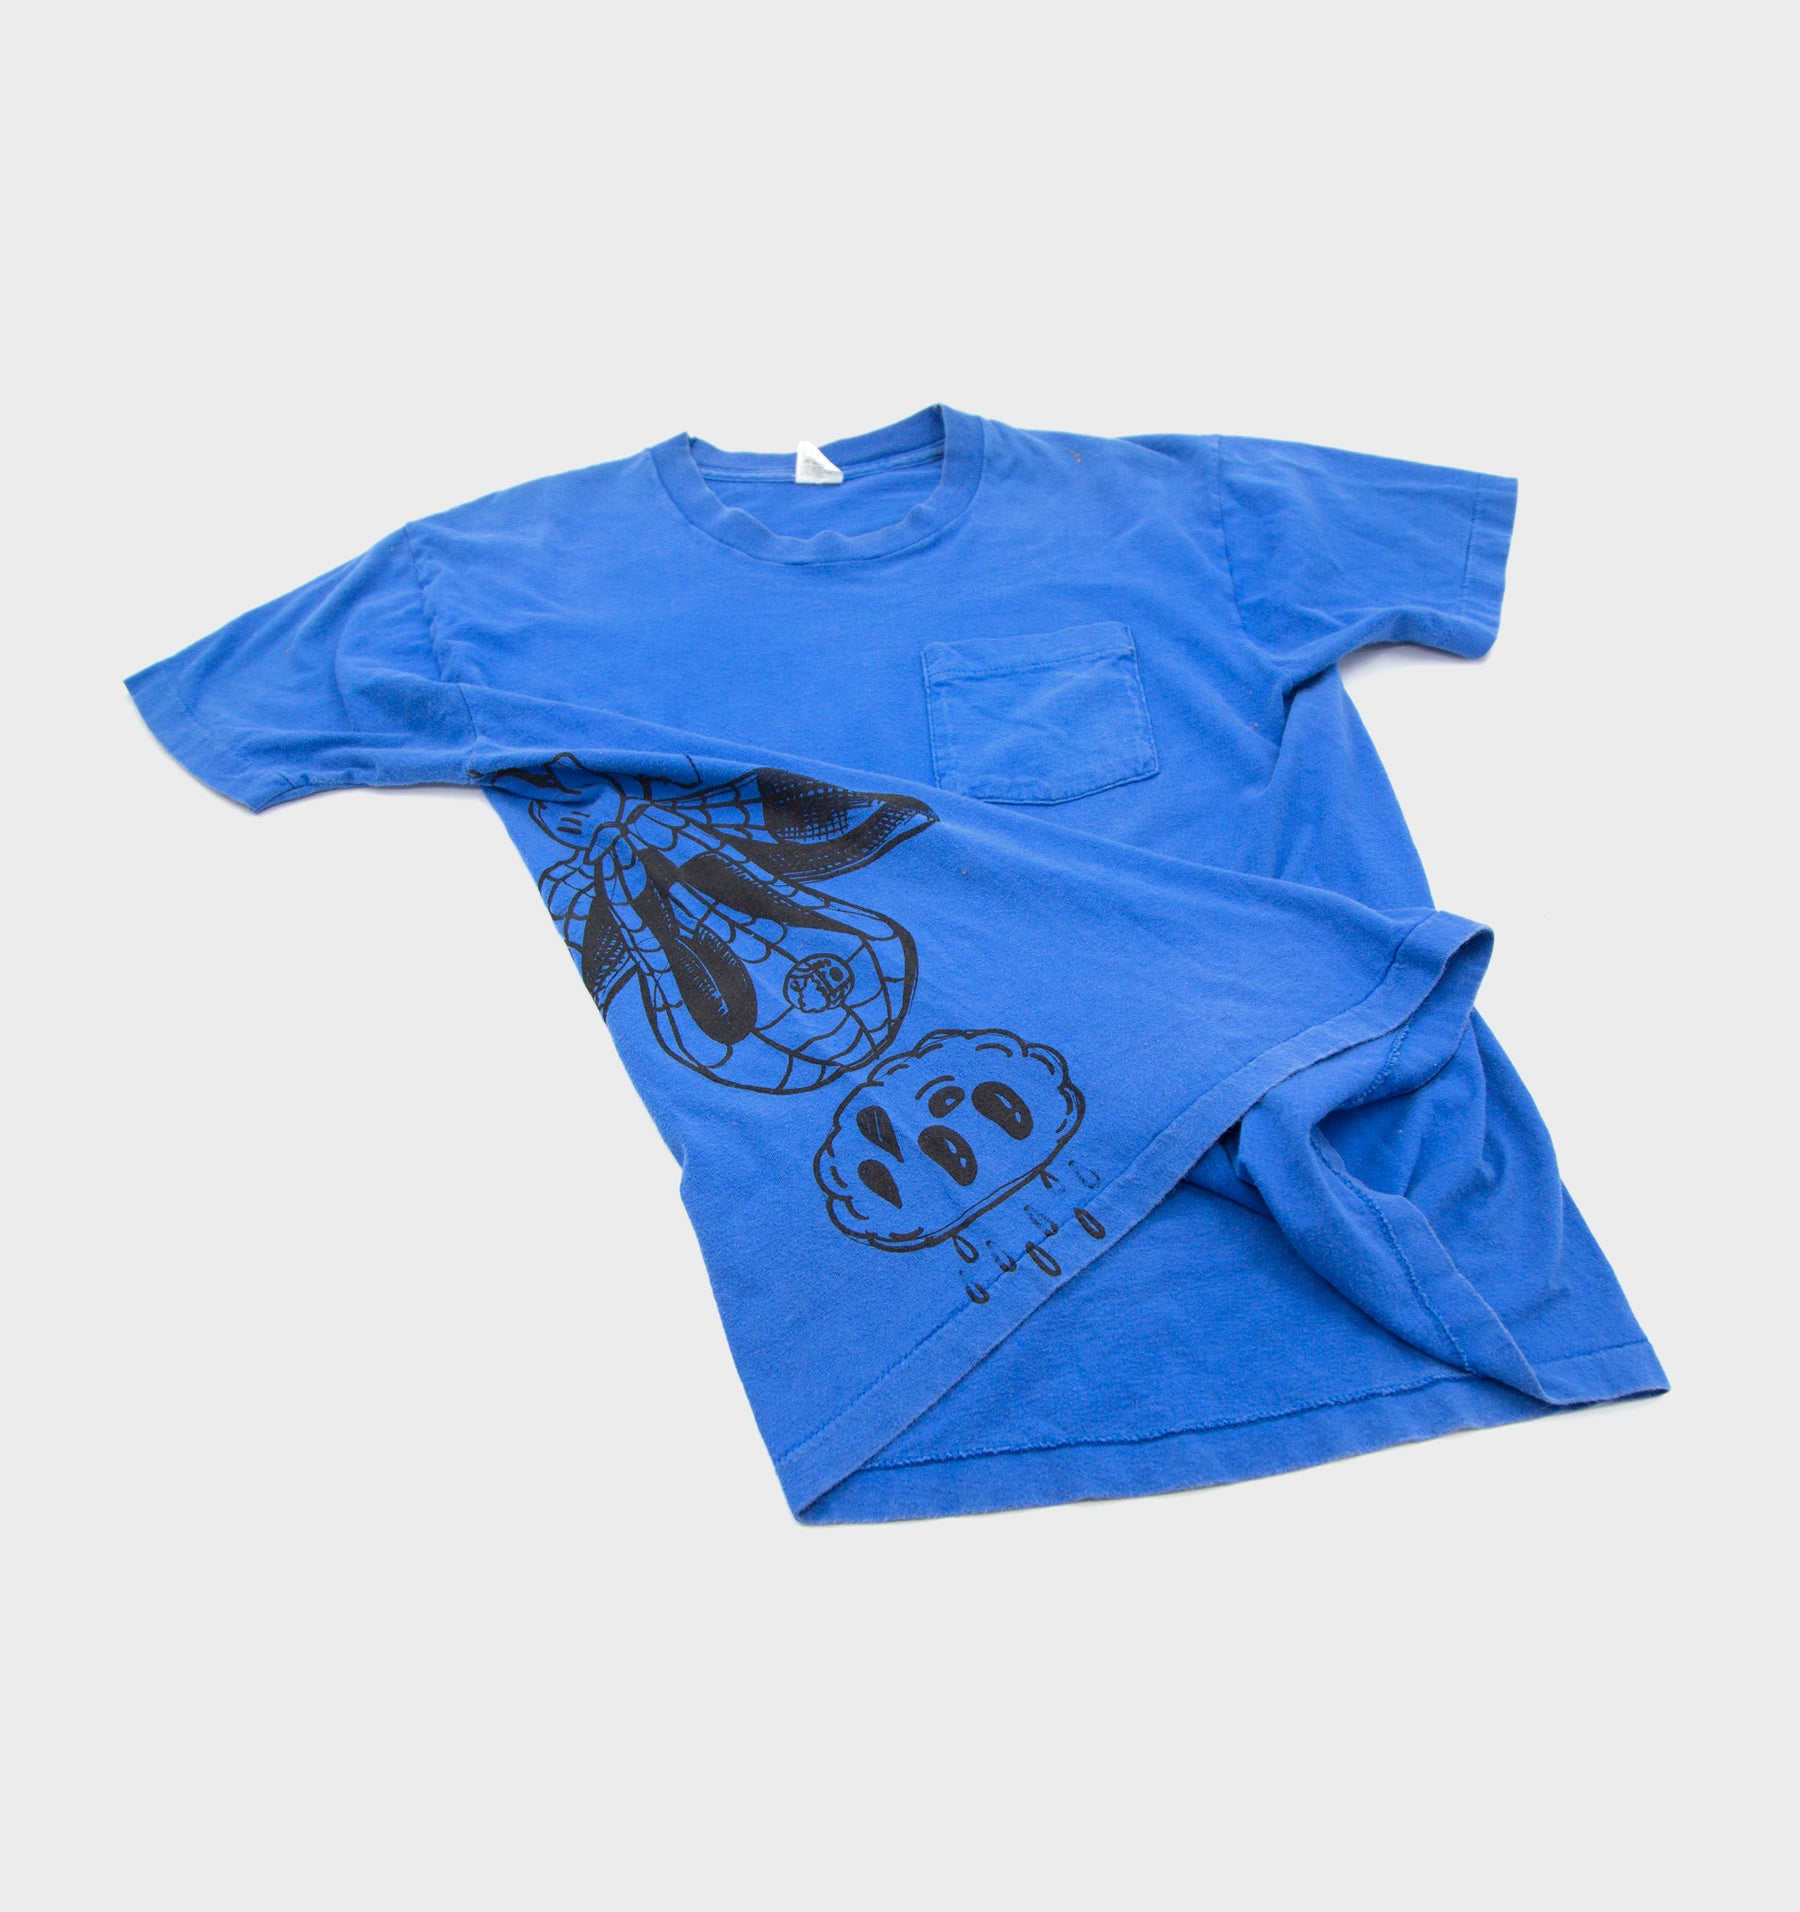 Alter Ego Vintage 1/1 - Blue T-Shirt - XL